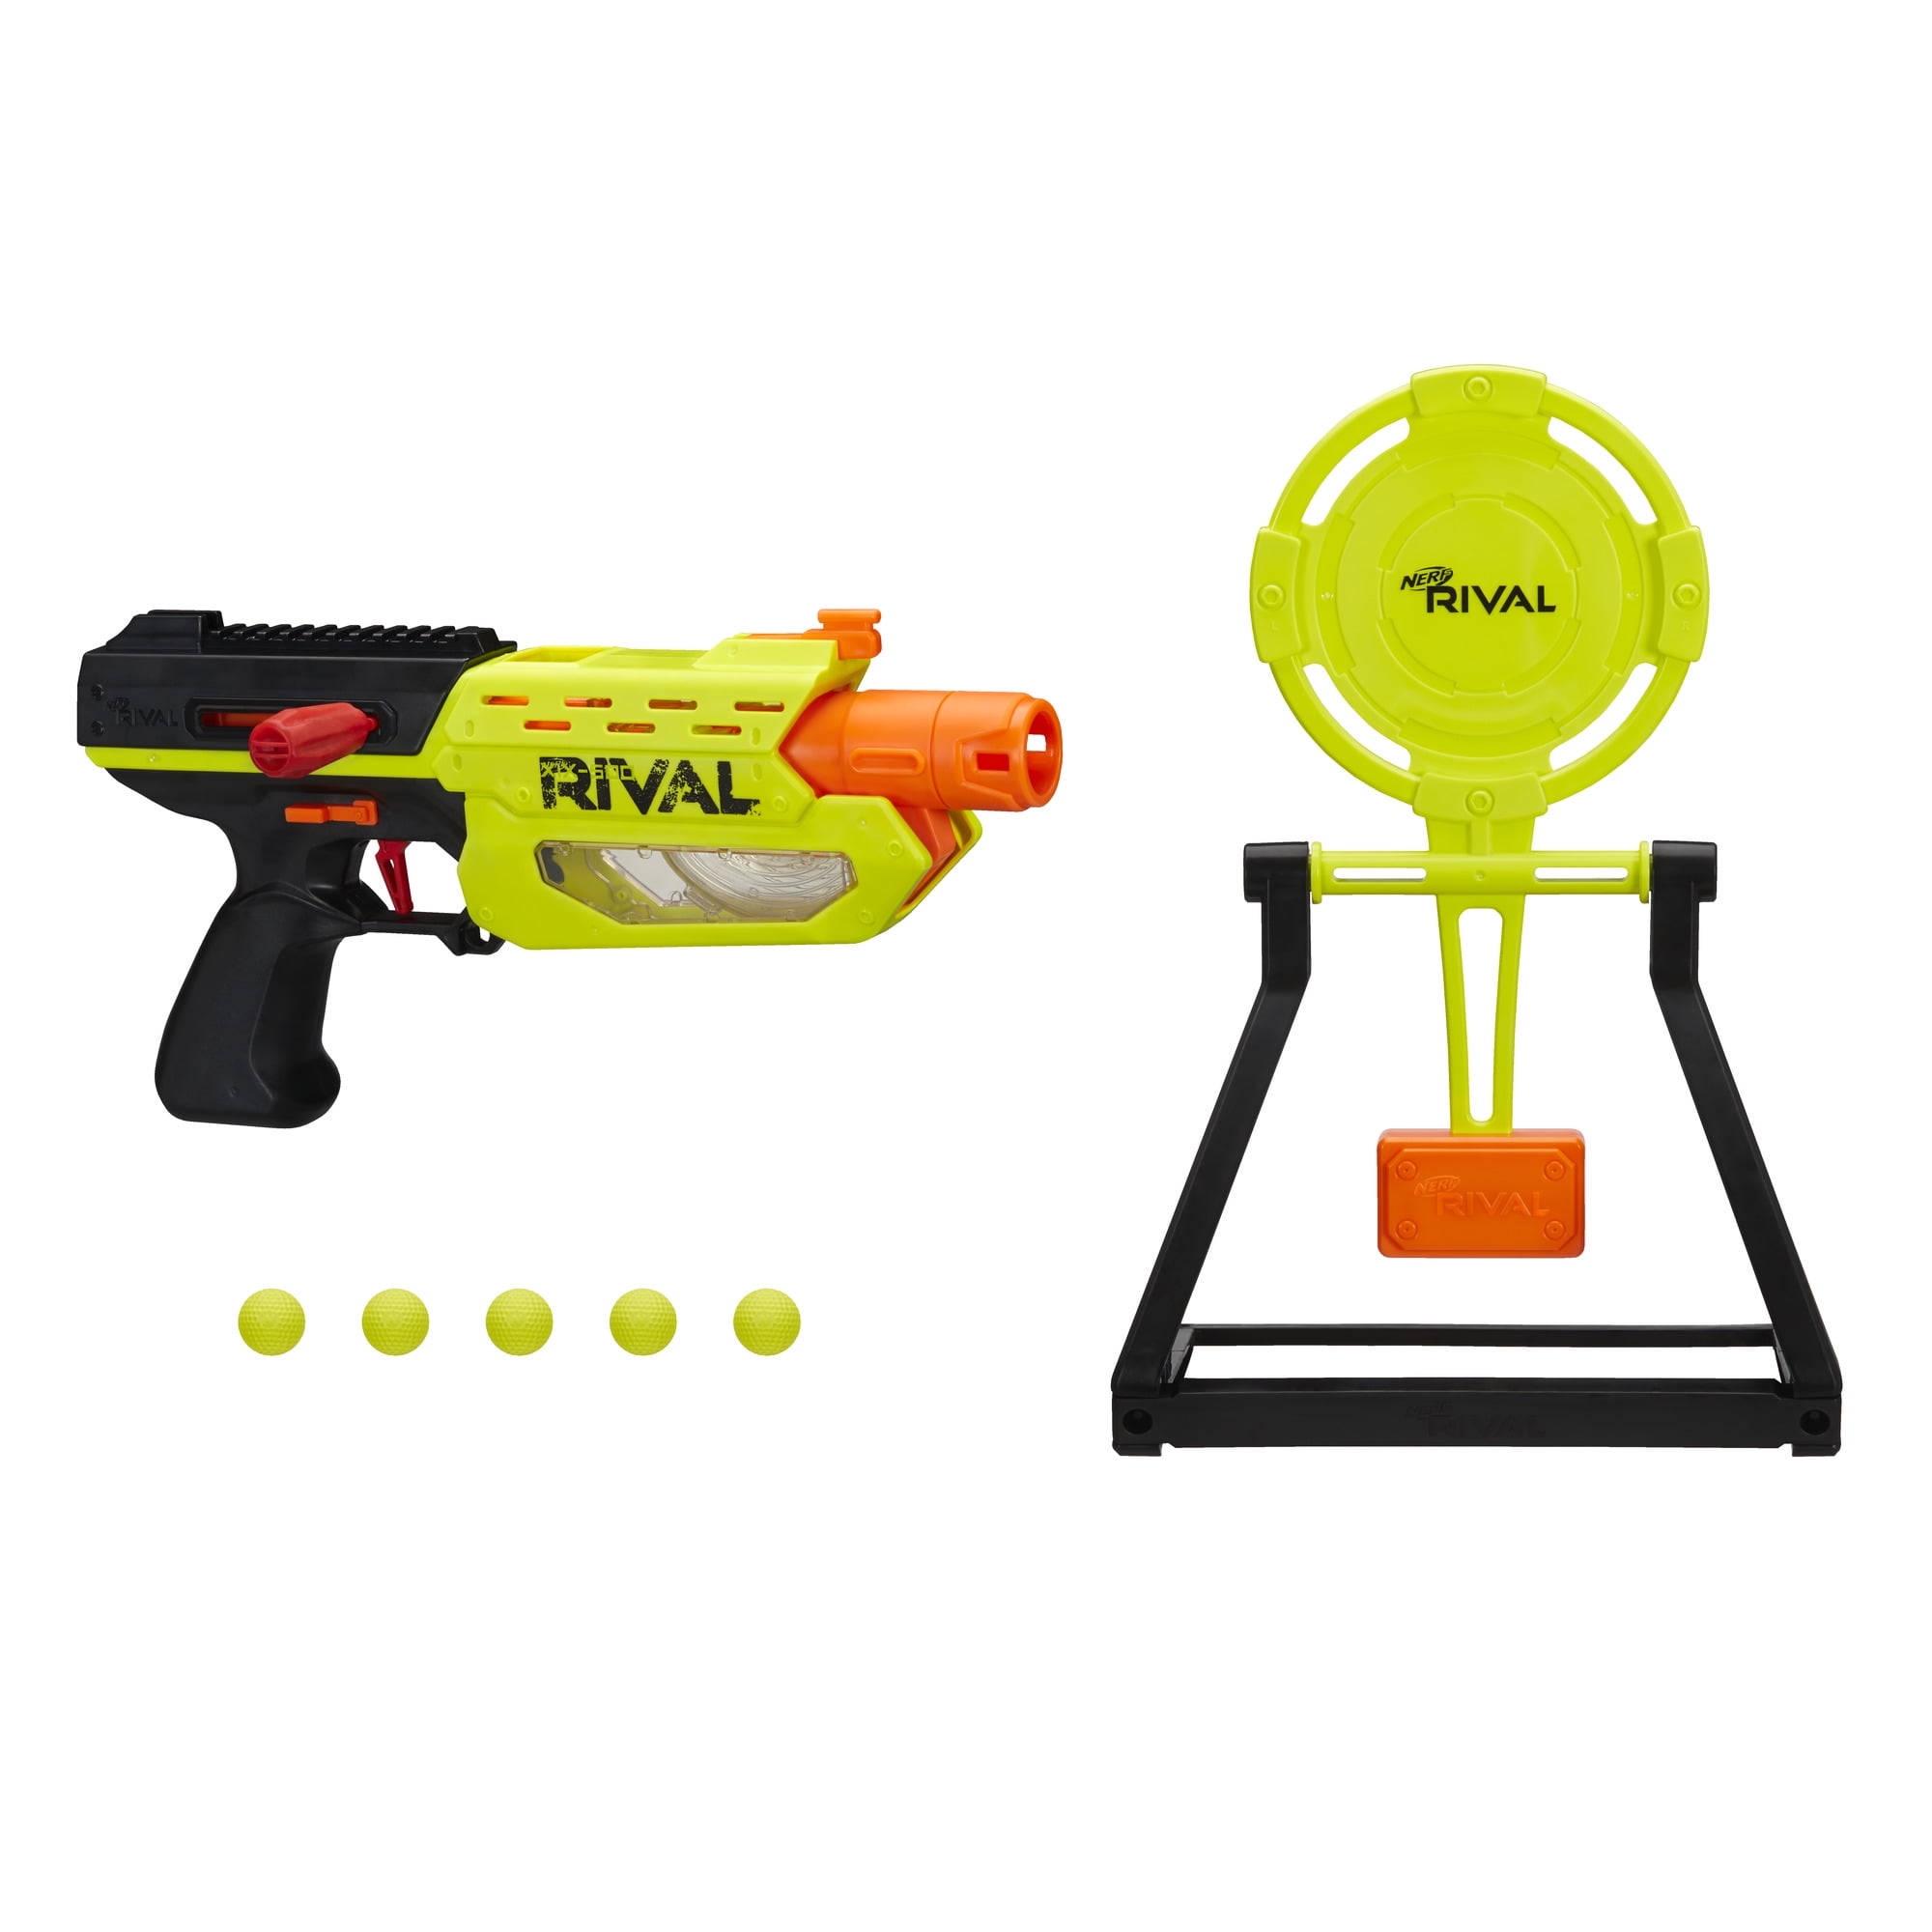 Nerf Rival Mercury Edge Series Blaster Target 5 Rounds Shooting Fun Toy Gun NEW